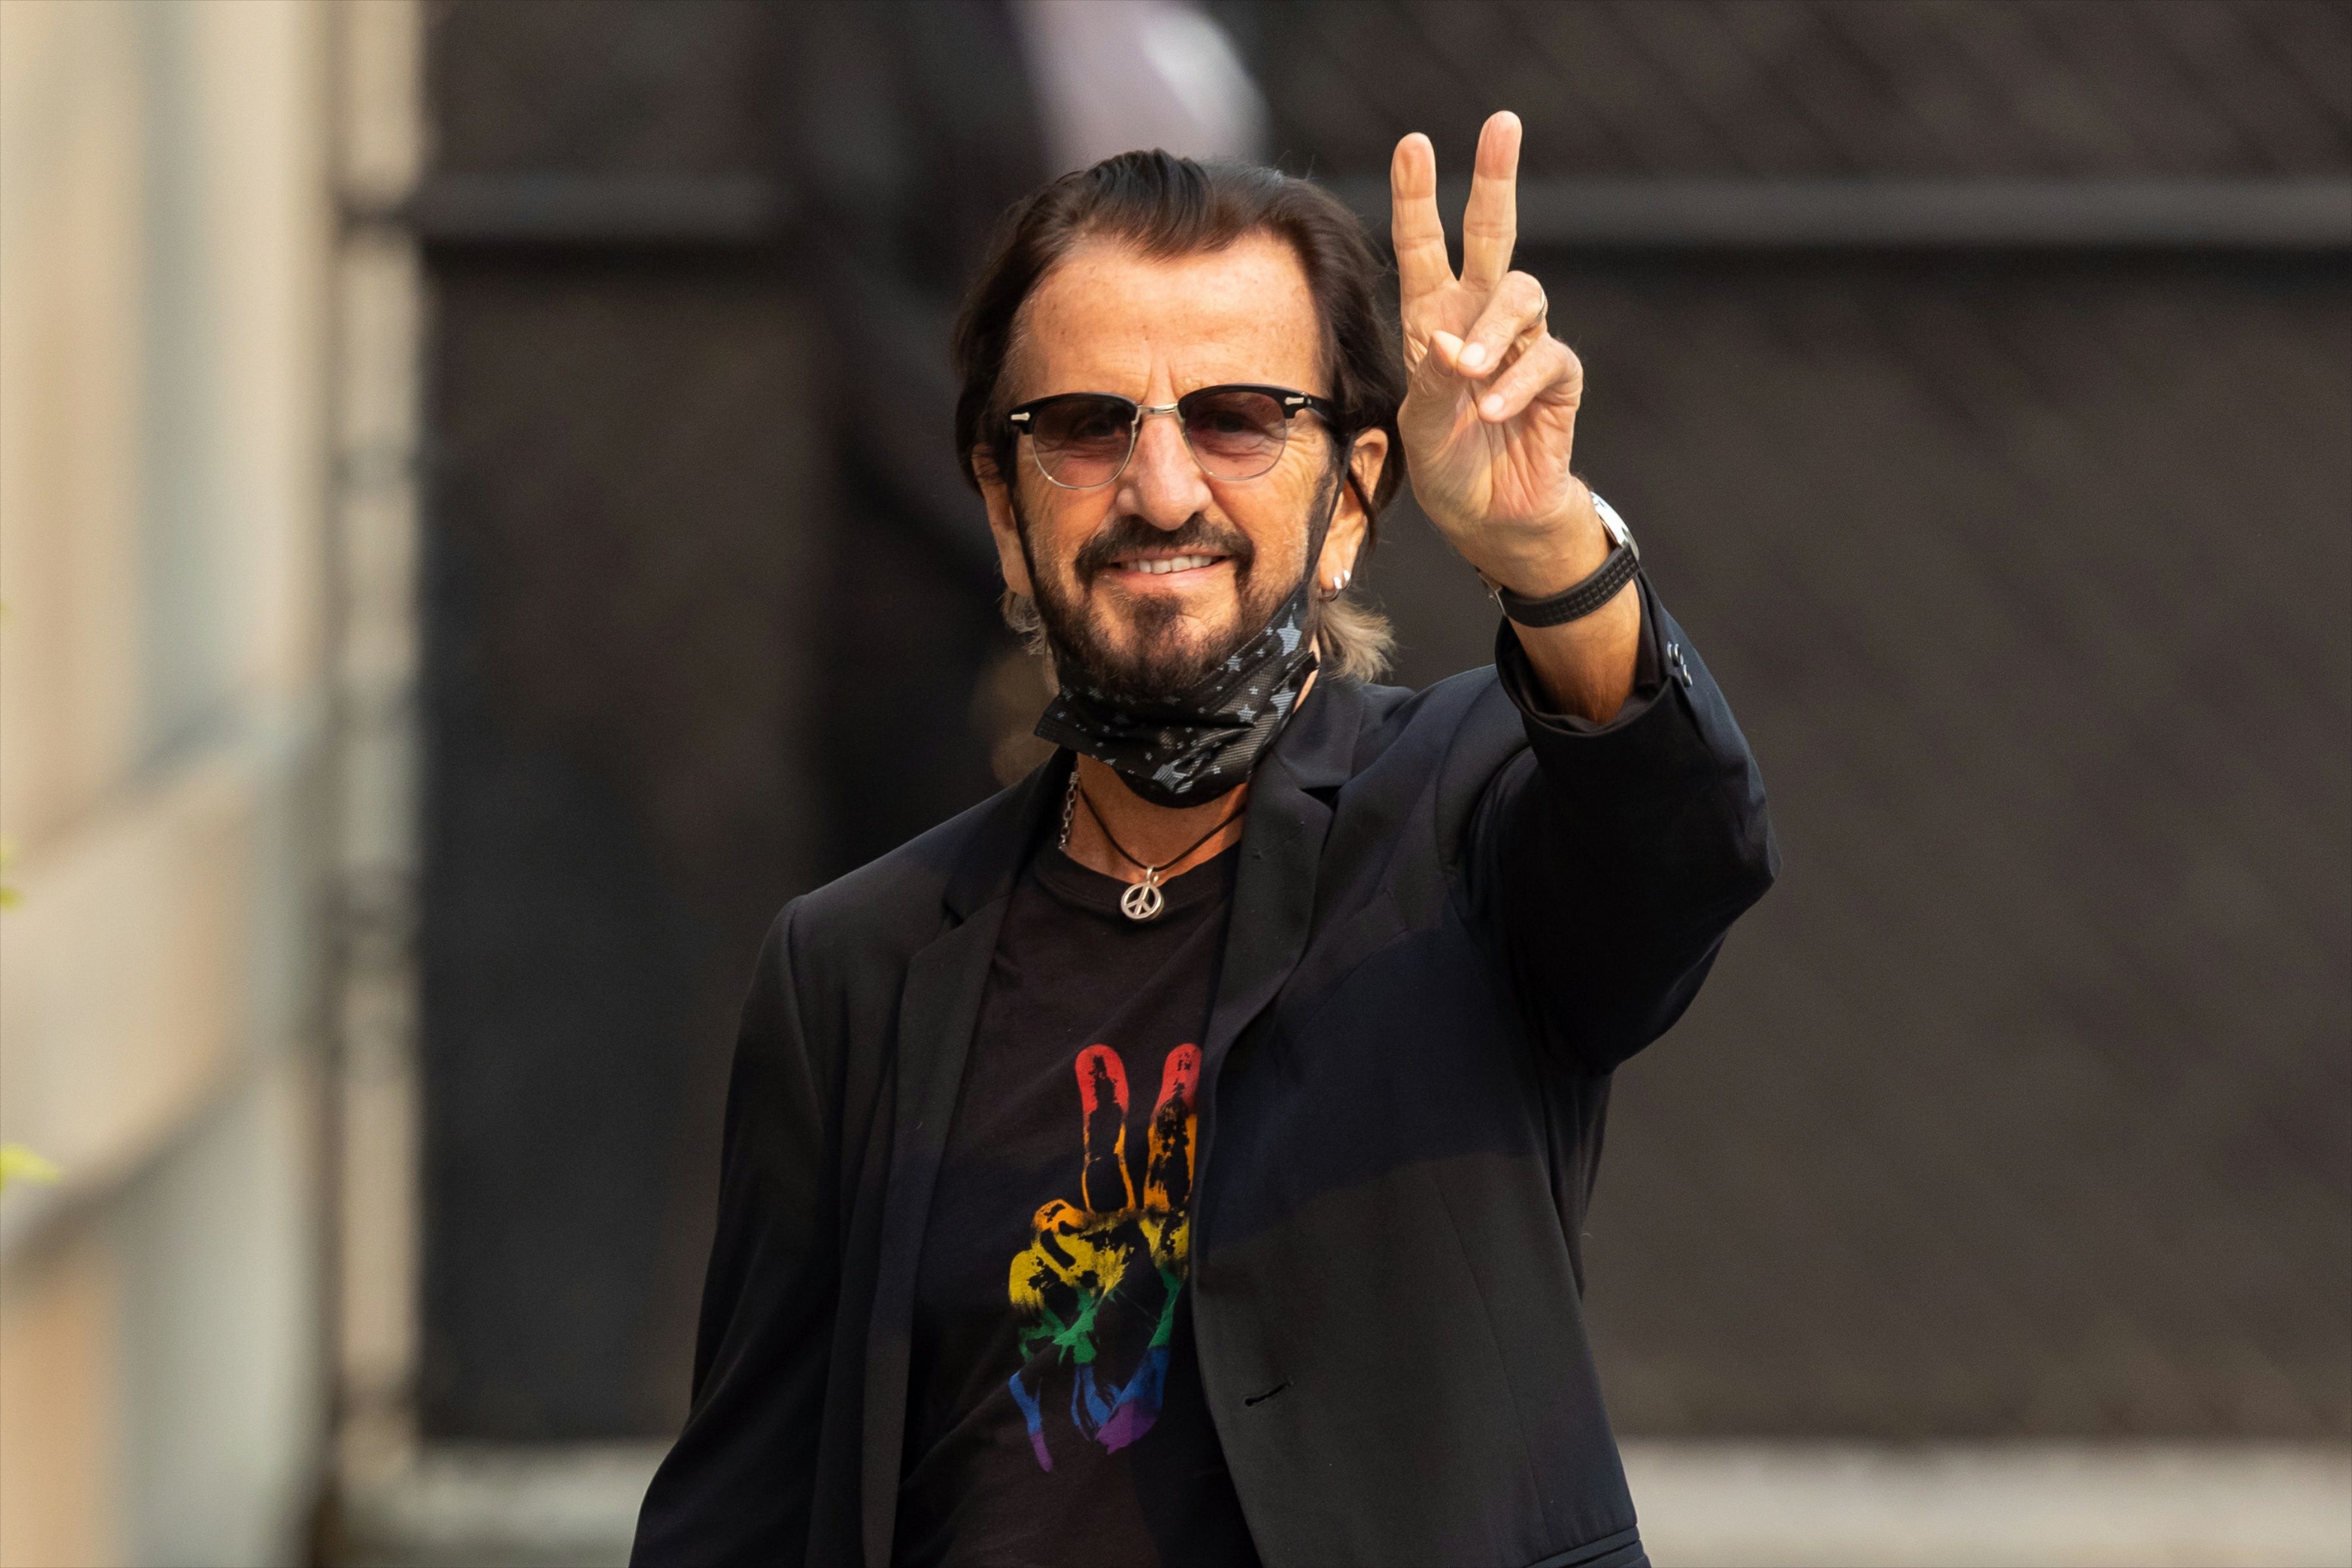 Musician Ringo Starr